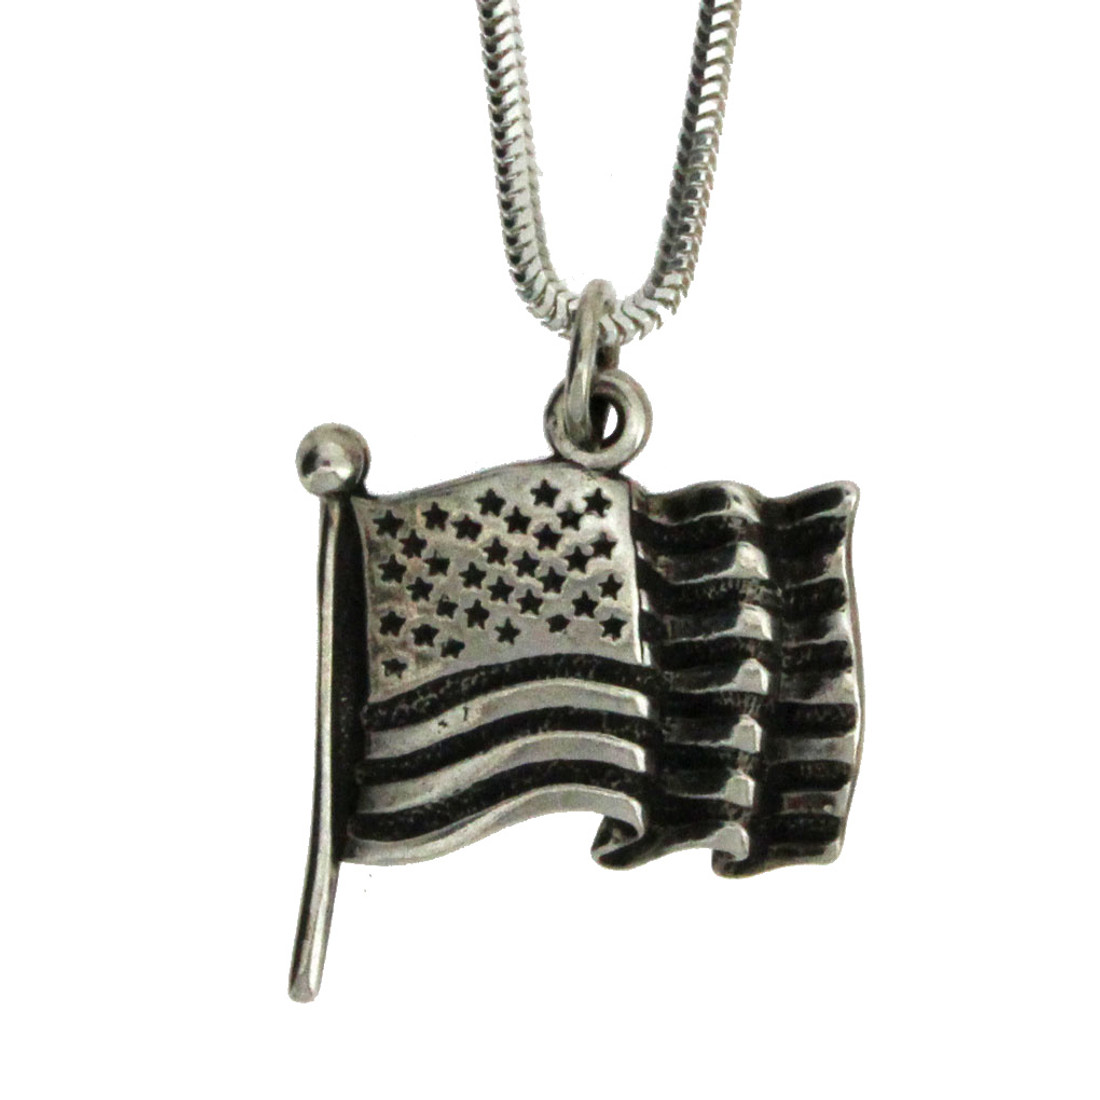 American flag pendant.